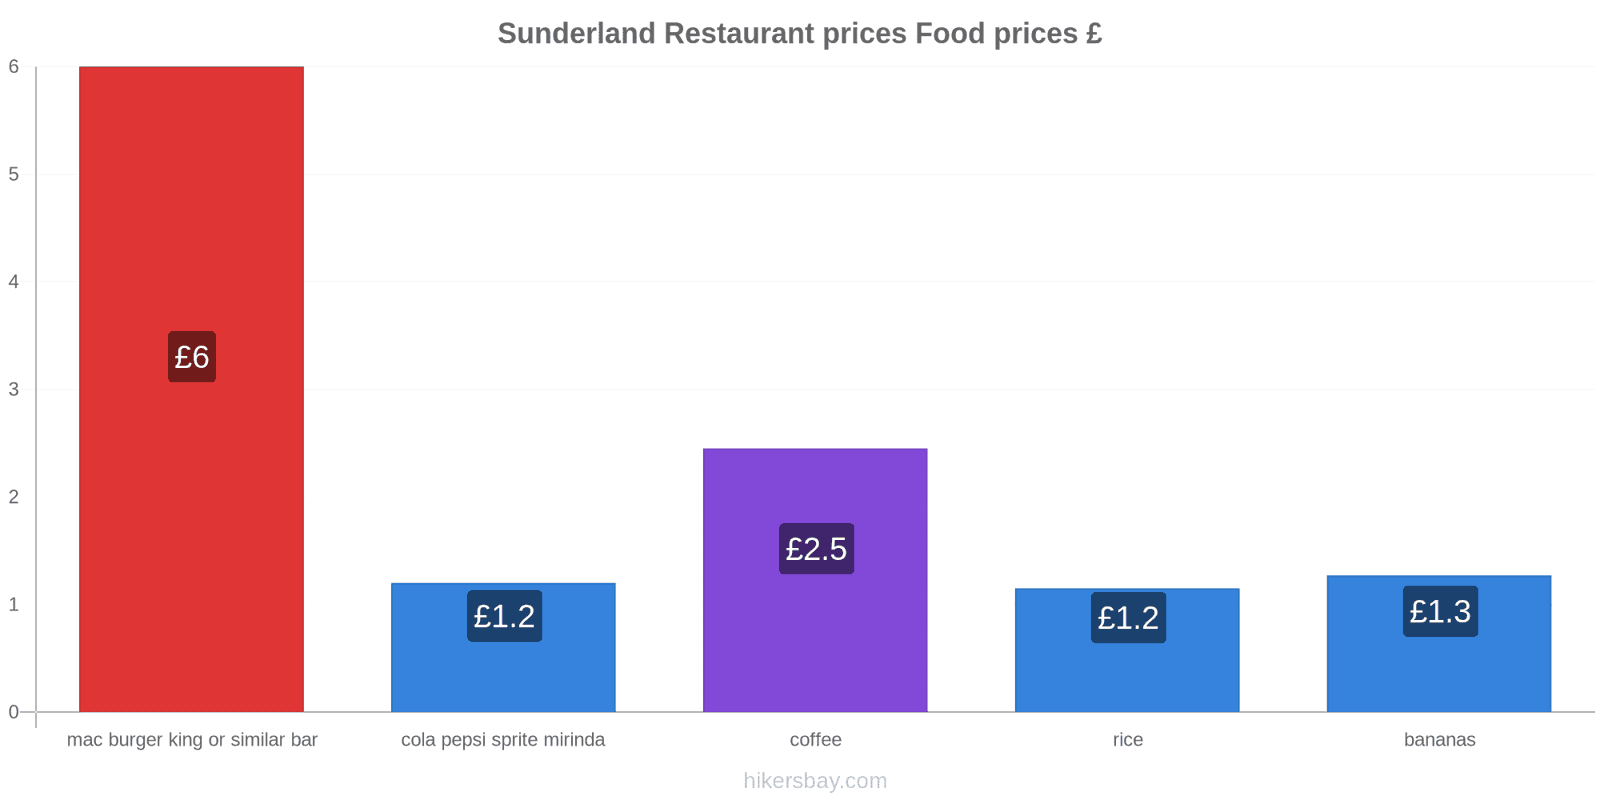 Sunderland price changes hikersbay.com